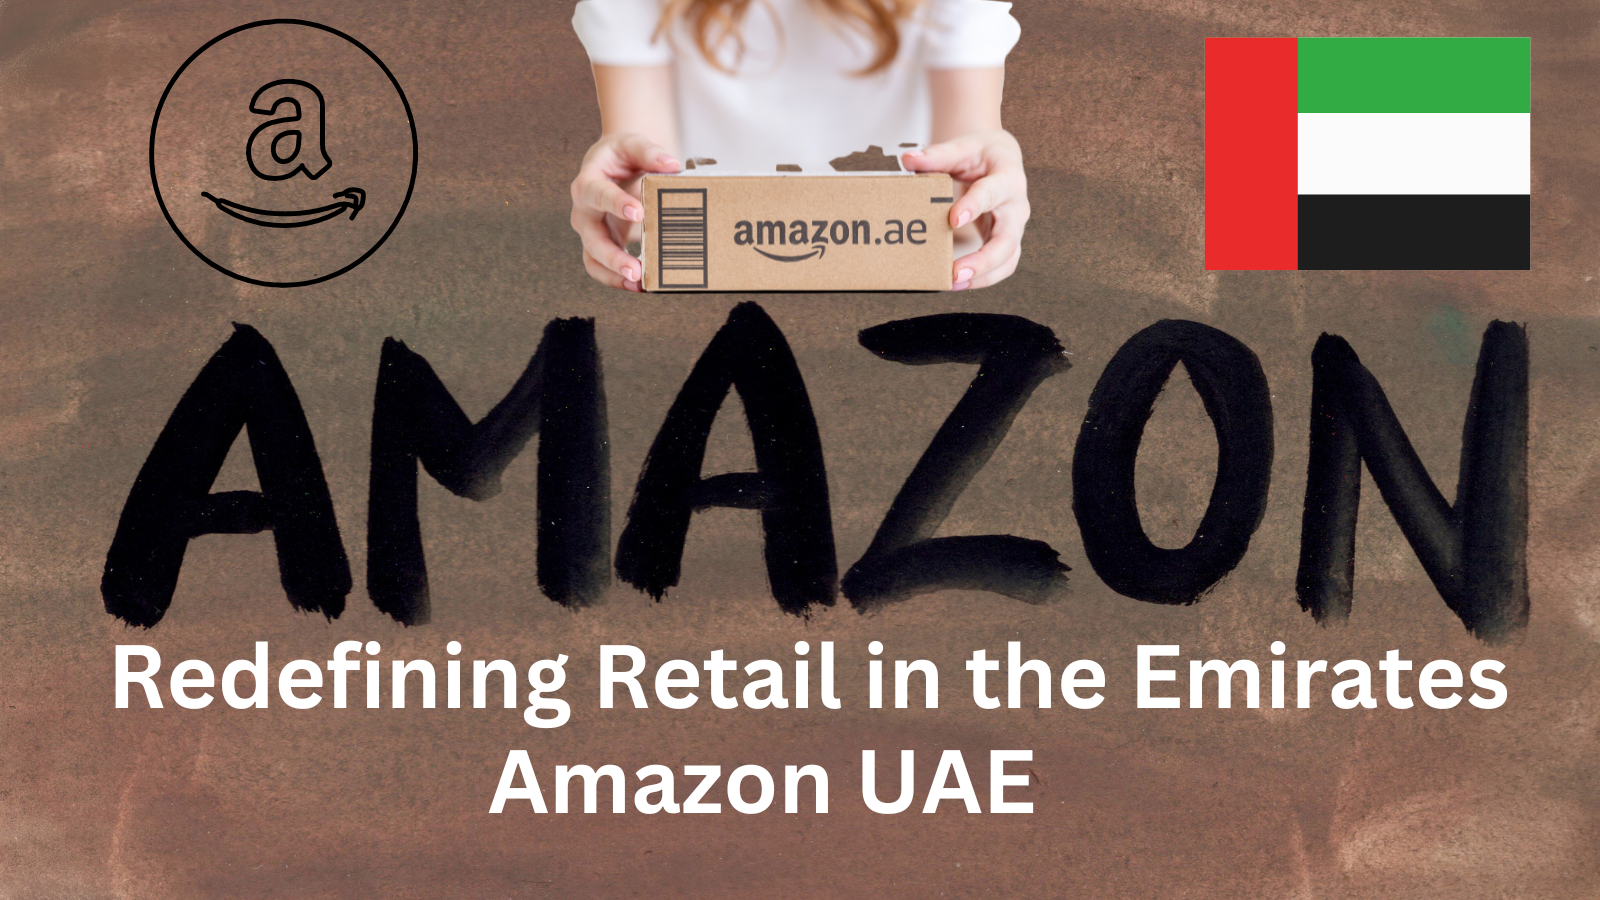 Amazon UAE: Redefining Retail in the Emirates